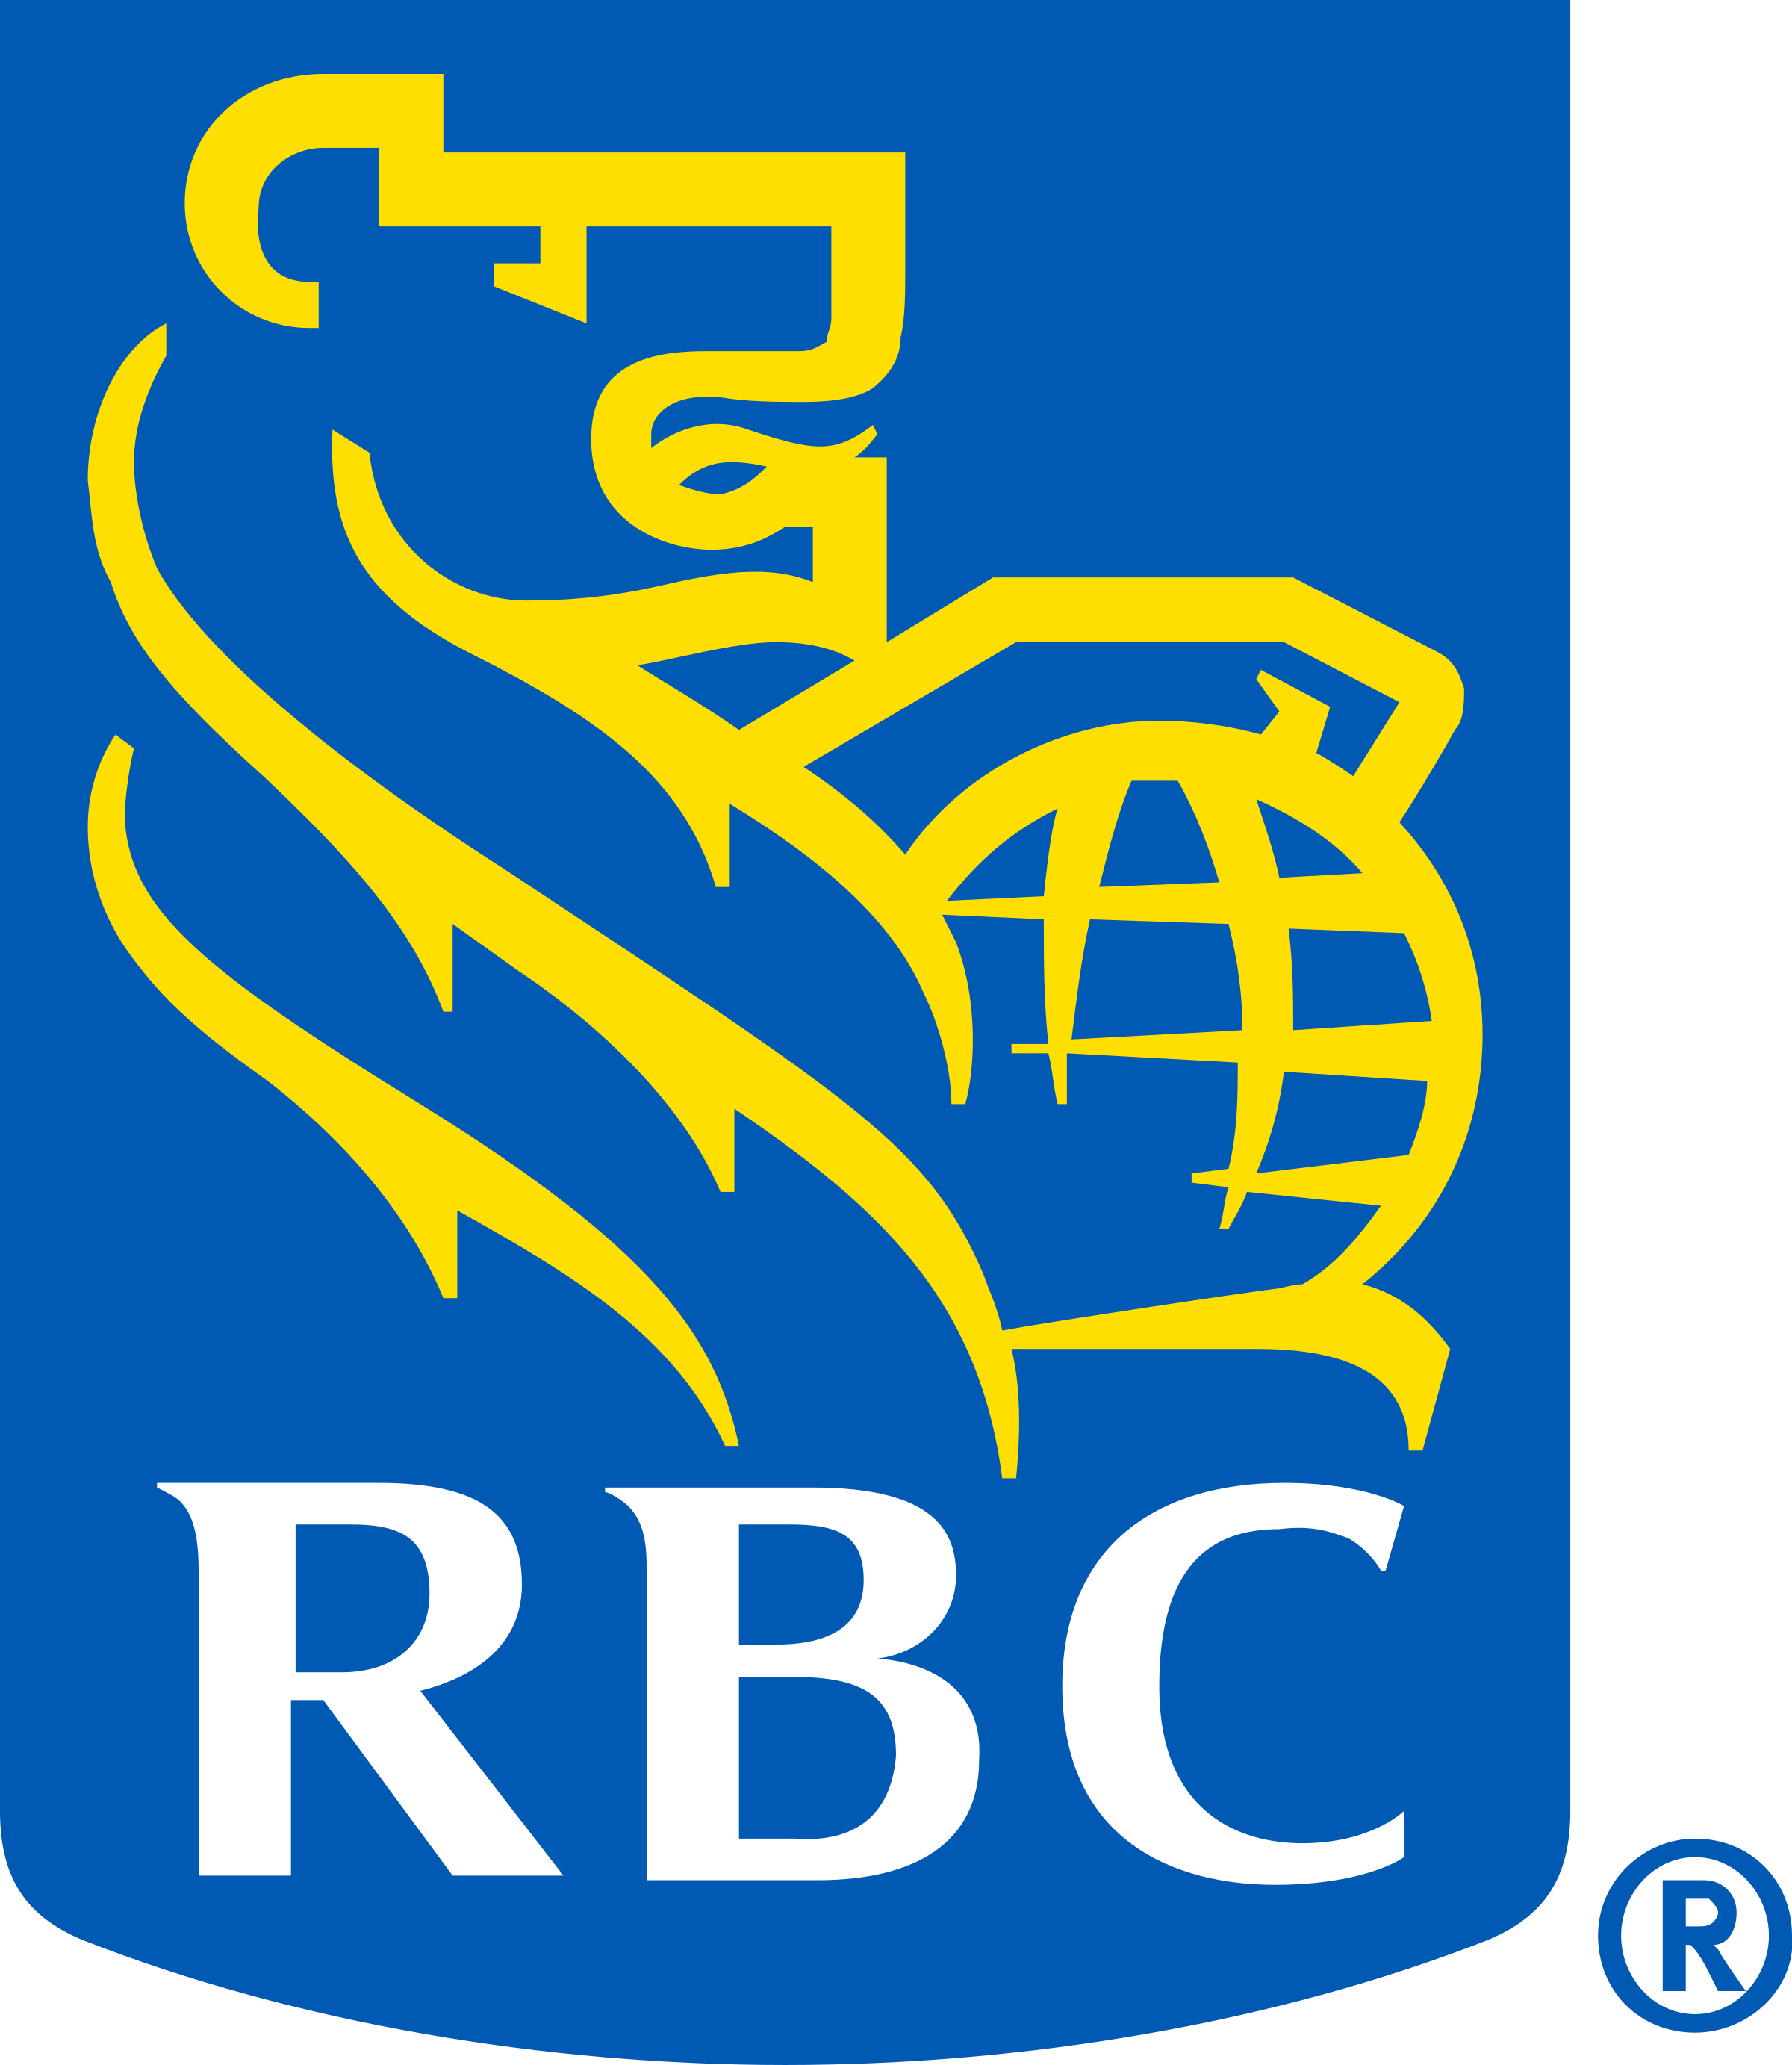 rbc-shield-logo-png-transparent.png